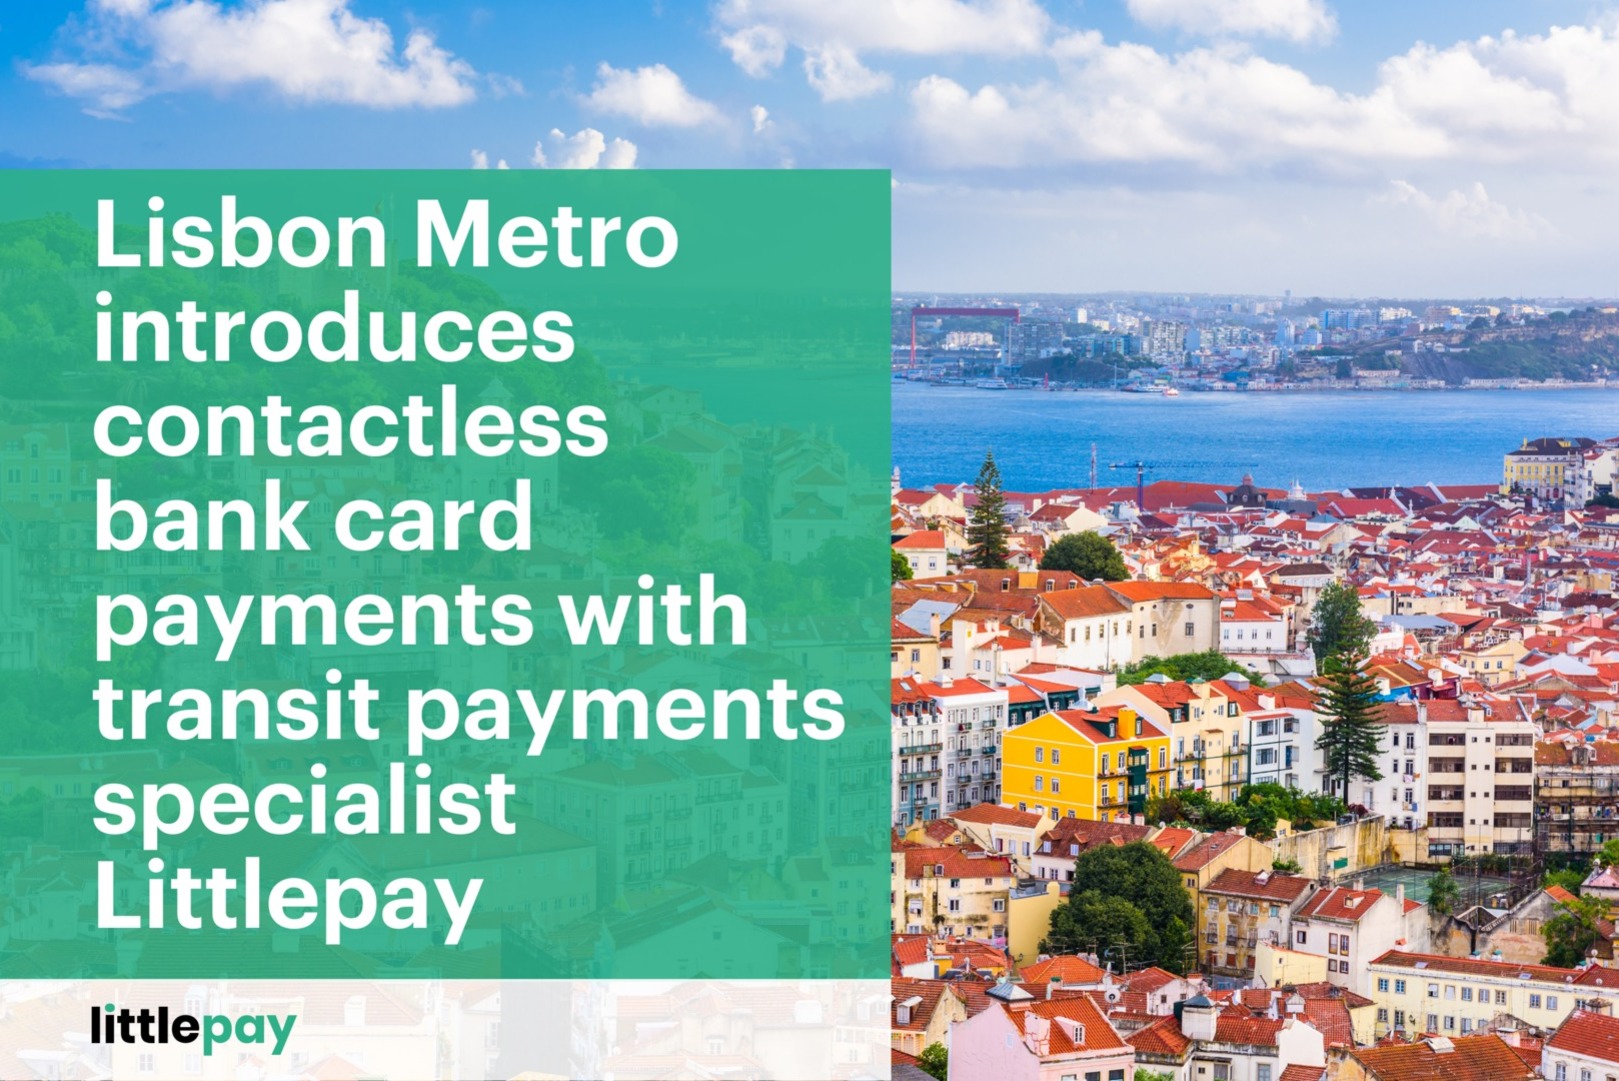 Lisbon Metro introduces contactless bank card payments